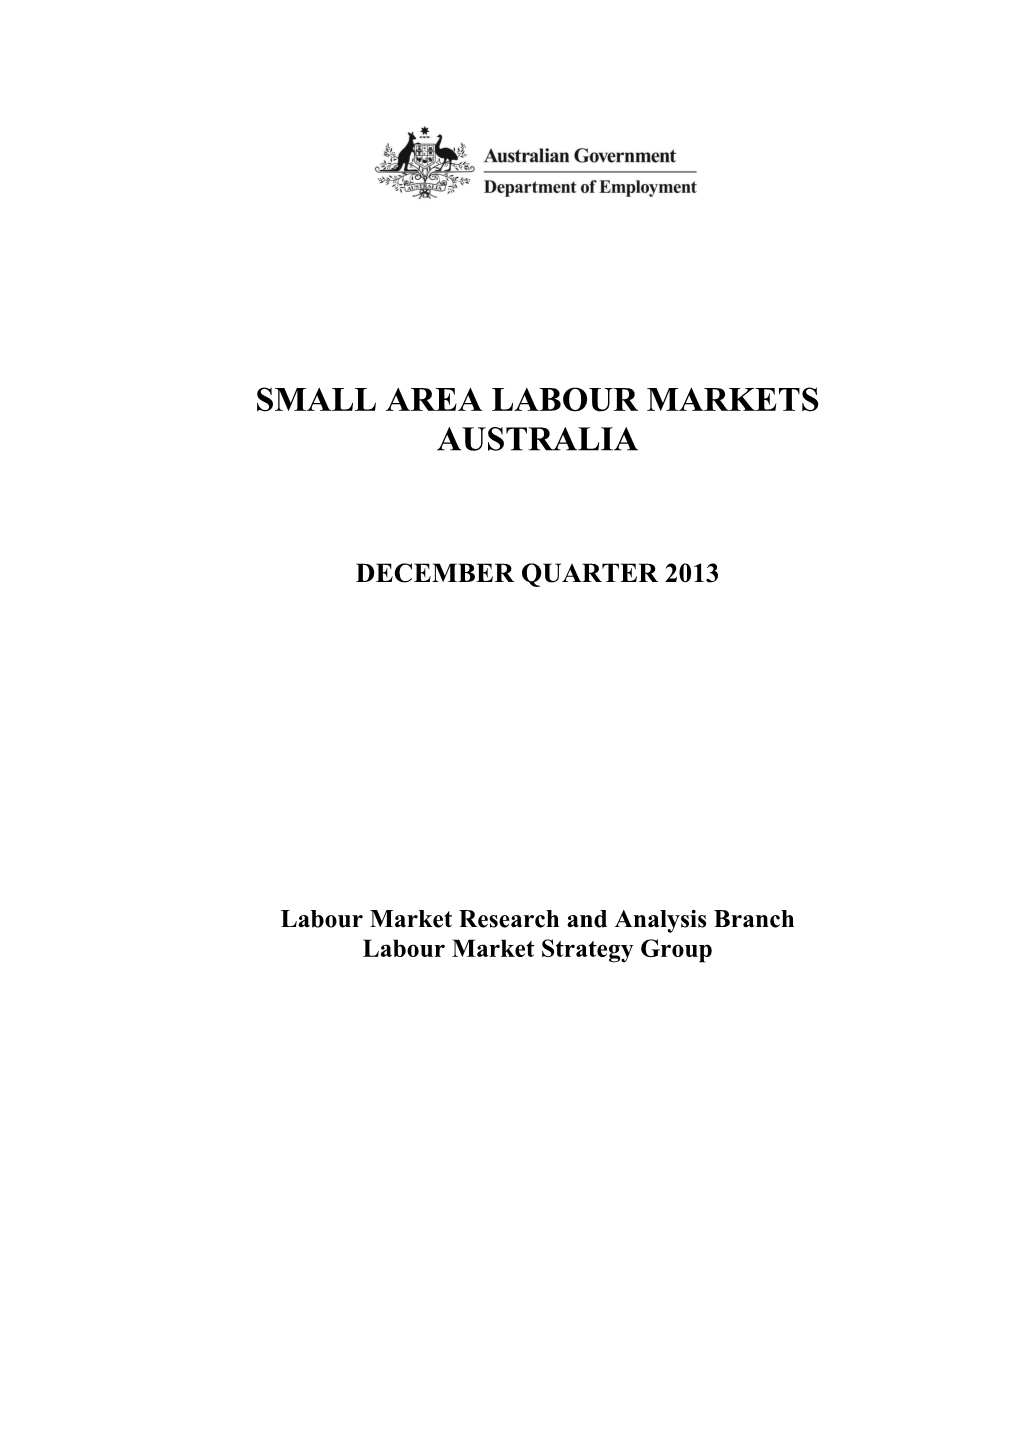 Small Area Labour Markets December Quarter 2013 5